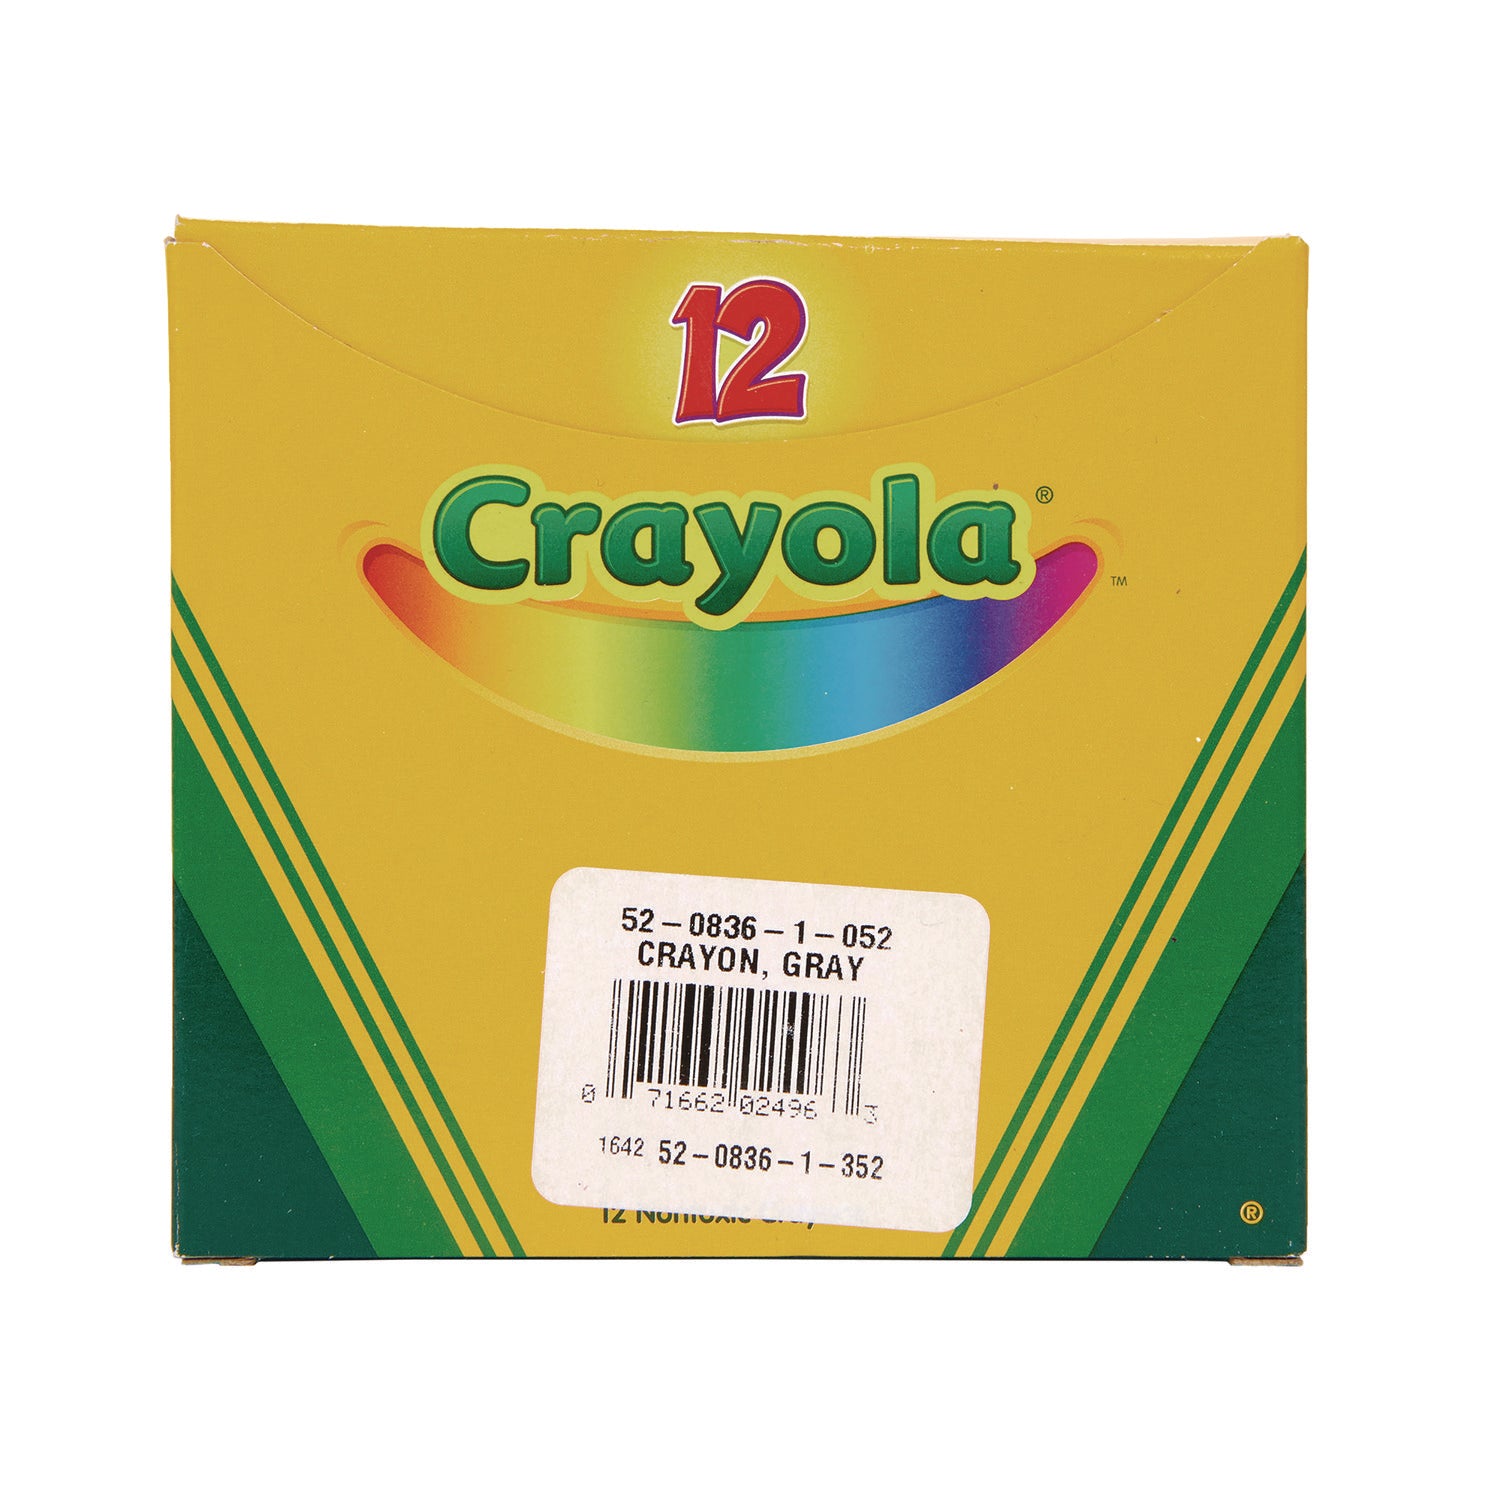 bulkl-crayons-gray-12-box_cyo520836052 - 5